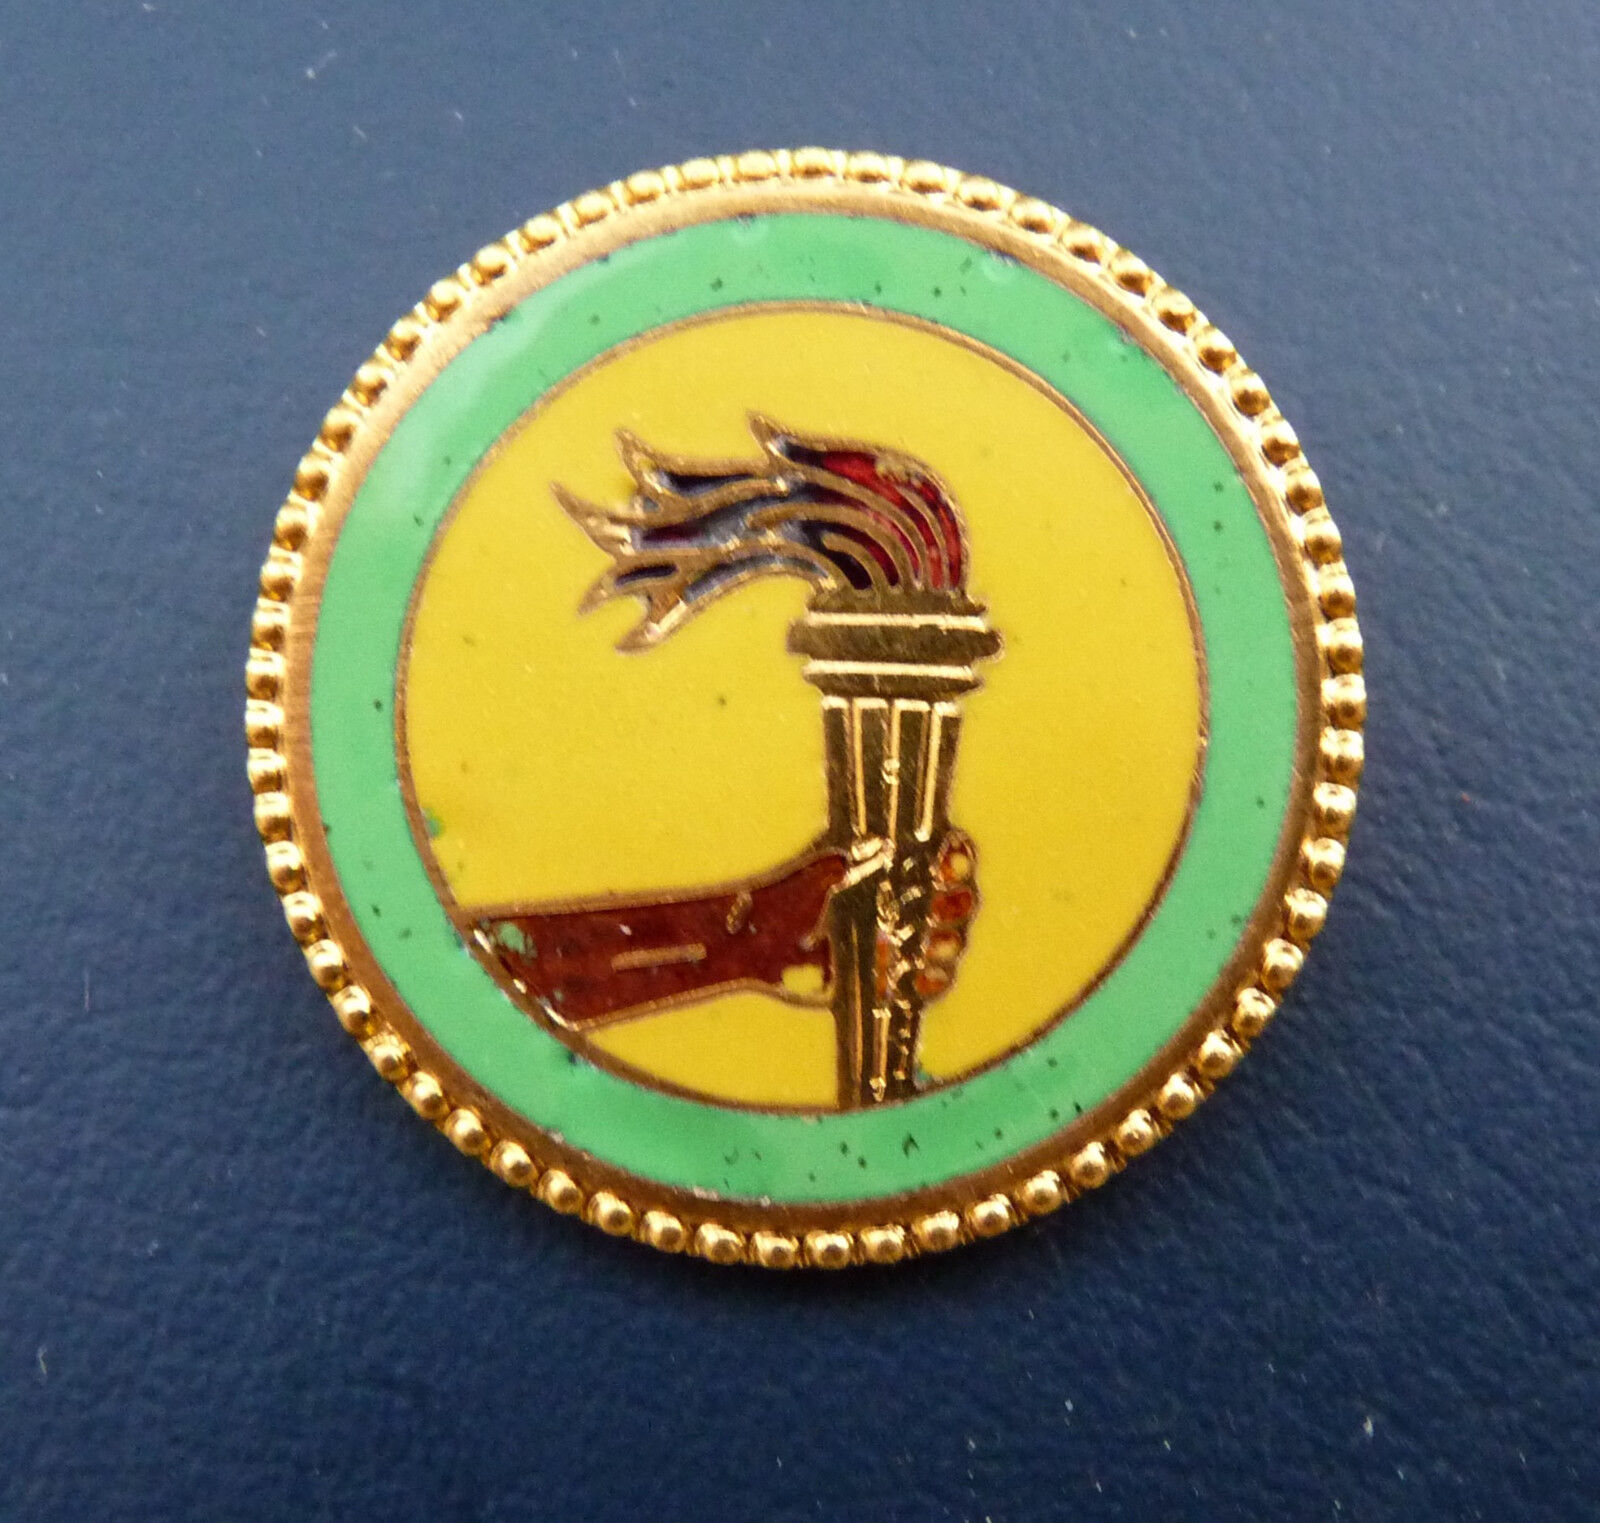 REPUBLIC OF ZAIRUS Round Metal Badge 25mm Diameter. Yellow and green background.